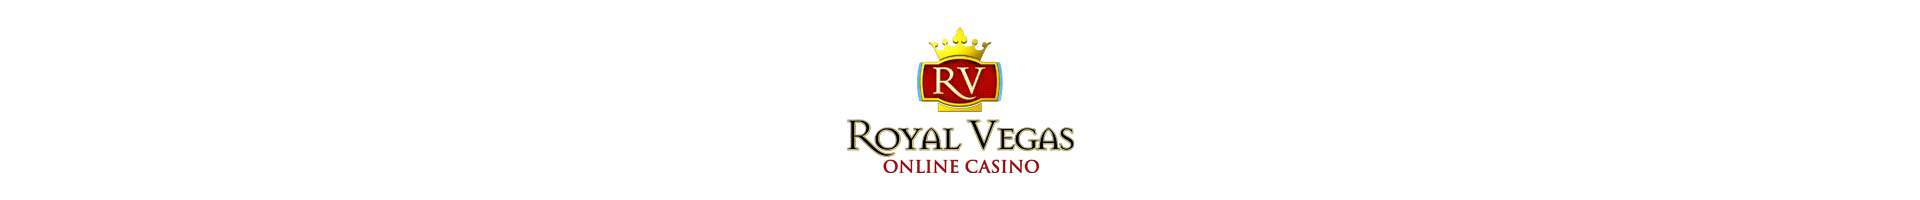 Royale casino.